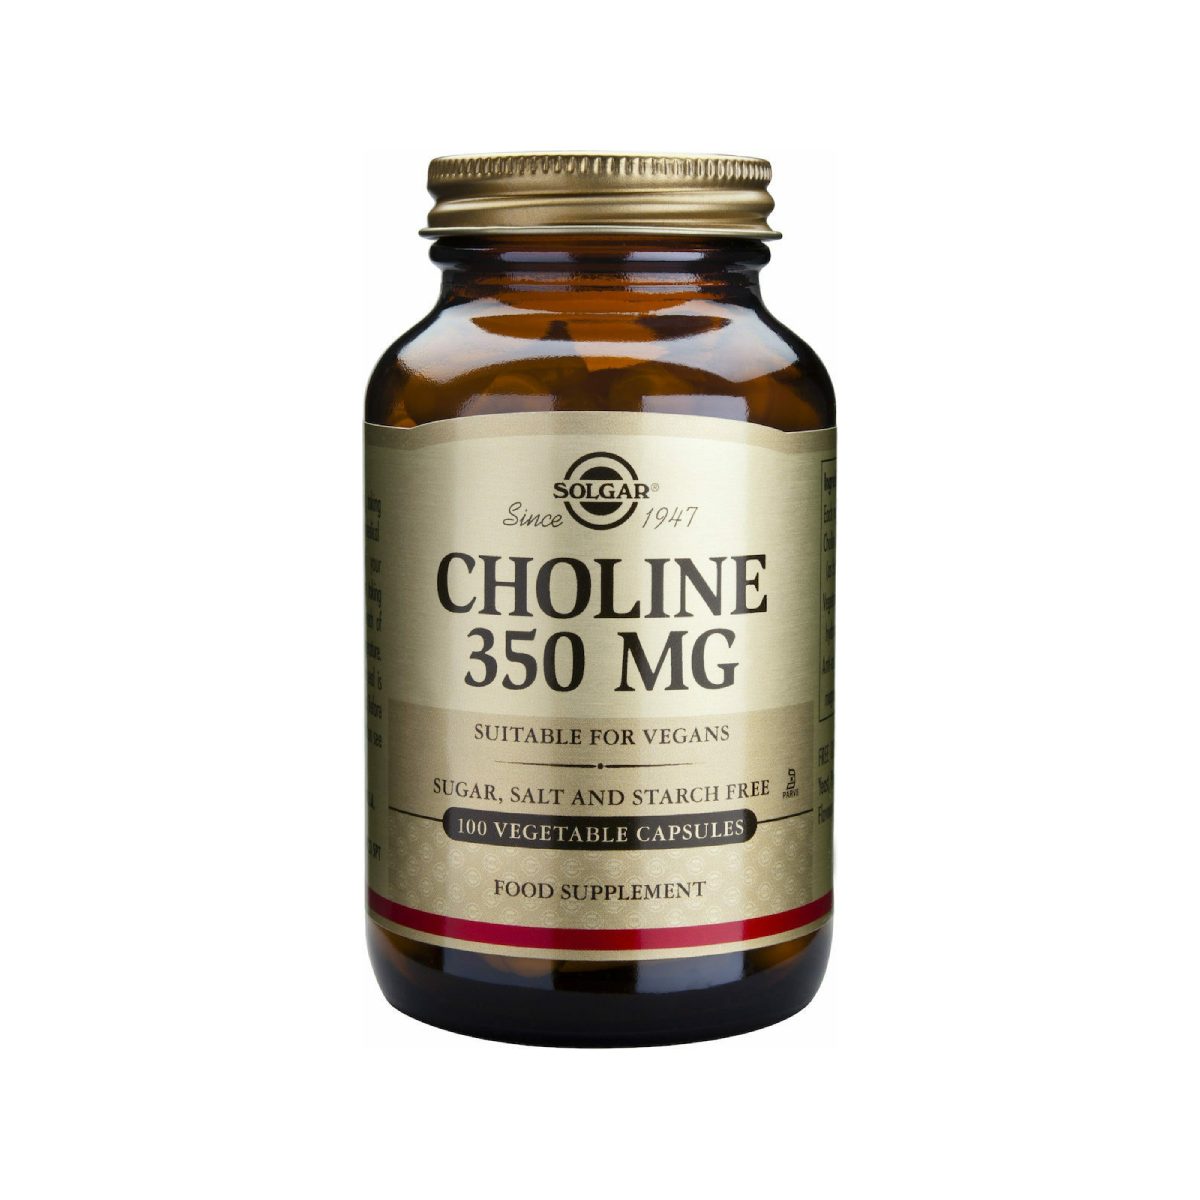 Solgar Choline 350mg Συμπλήρωμα Διατροφής Χολίνη για Καλή Λειτουργία του Νευρικού Συστήματος, Εγκεφάλου & Μνήμης - Συμβάλλει στο Μεταβολισμό Λιπών & Χοληστερίνης, 100veg.caps